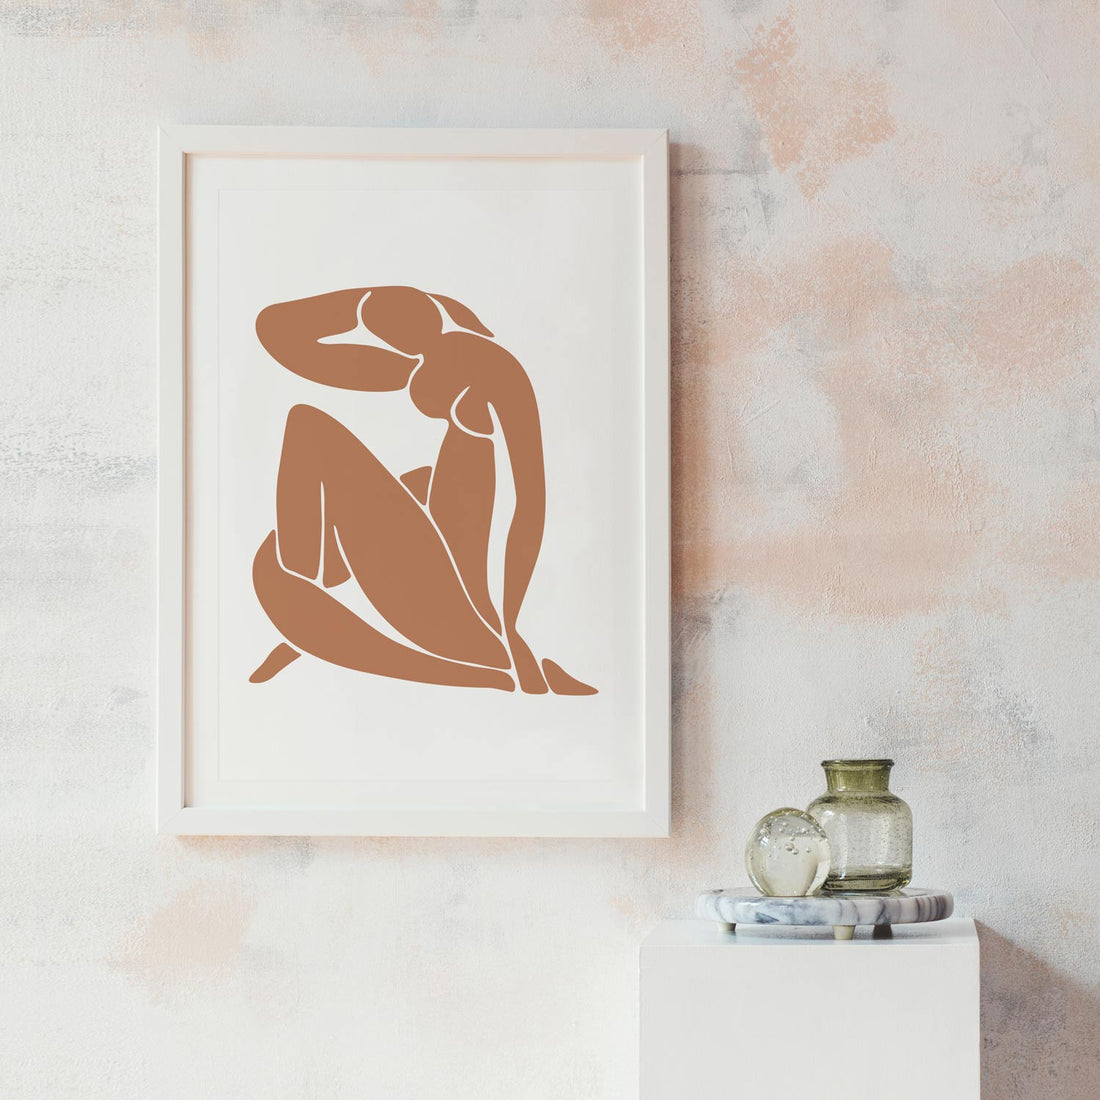 Nude woman silhouette art print